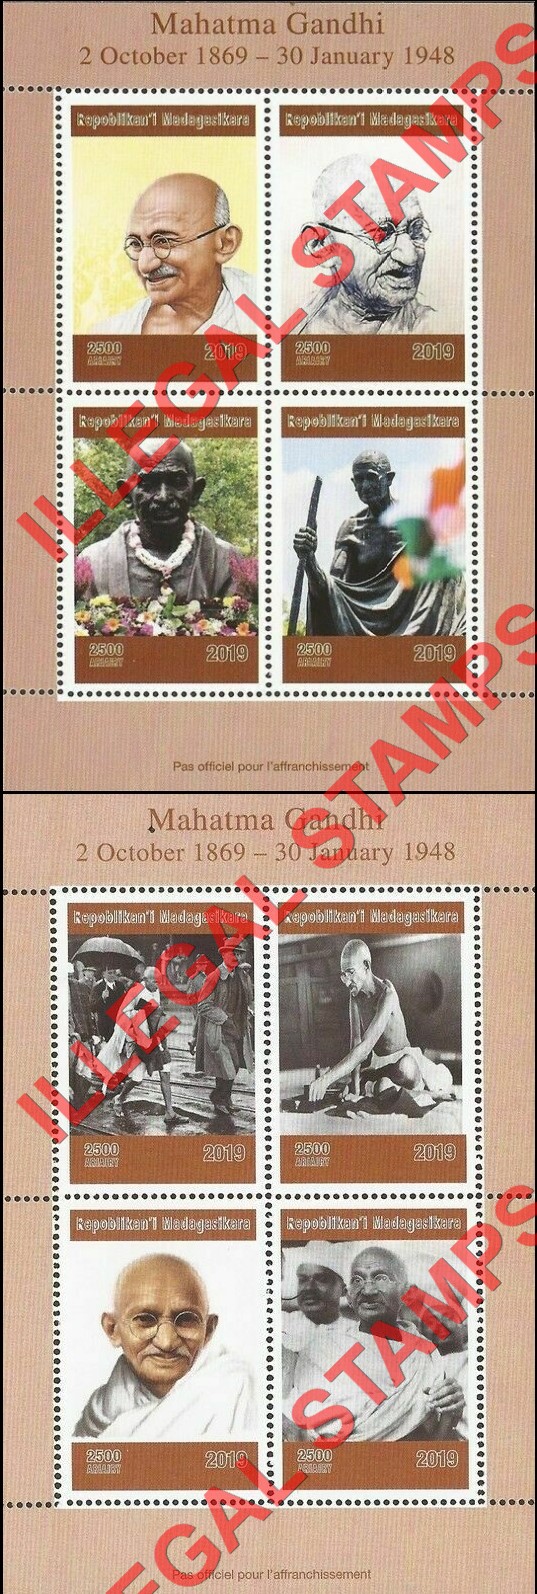 Madagascar 2019 Mahatma Gandhi Illegal Stamp Souvenir Sheets of 4